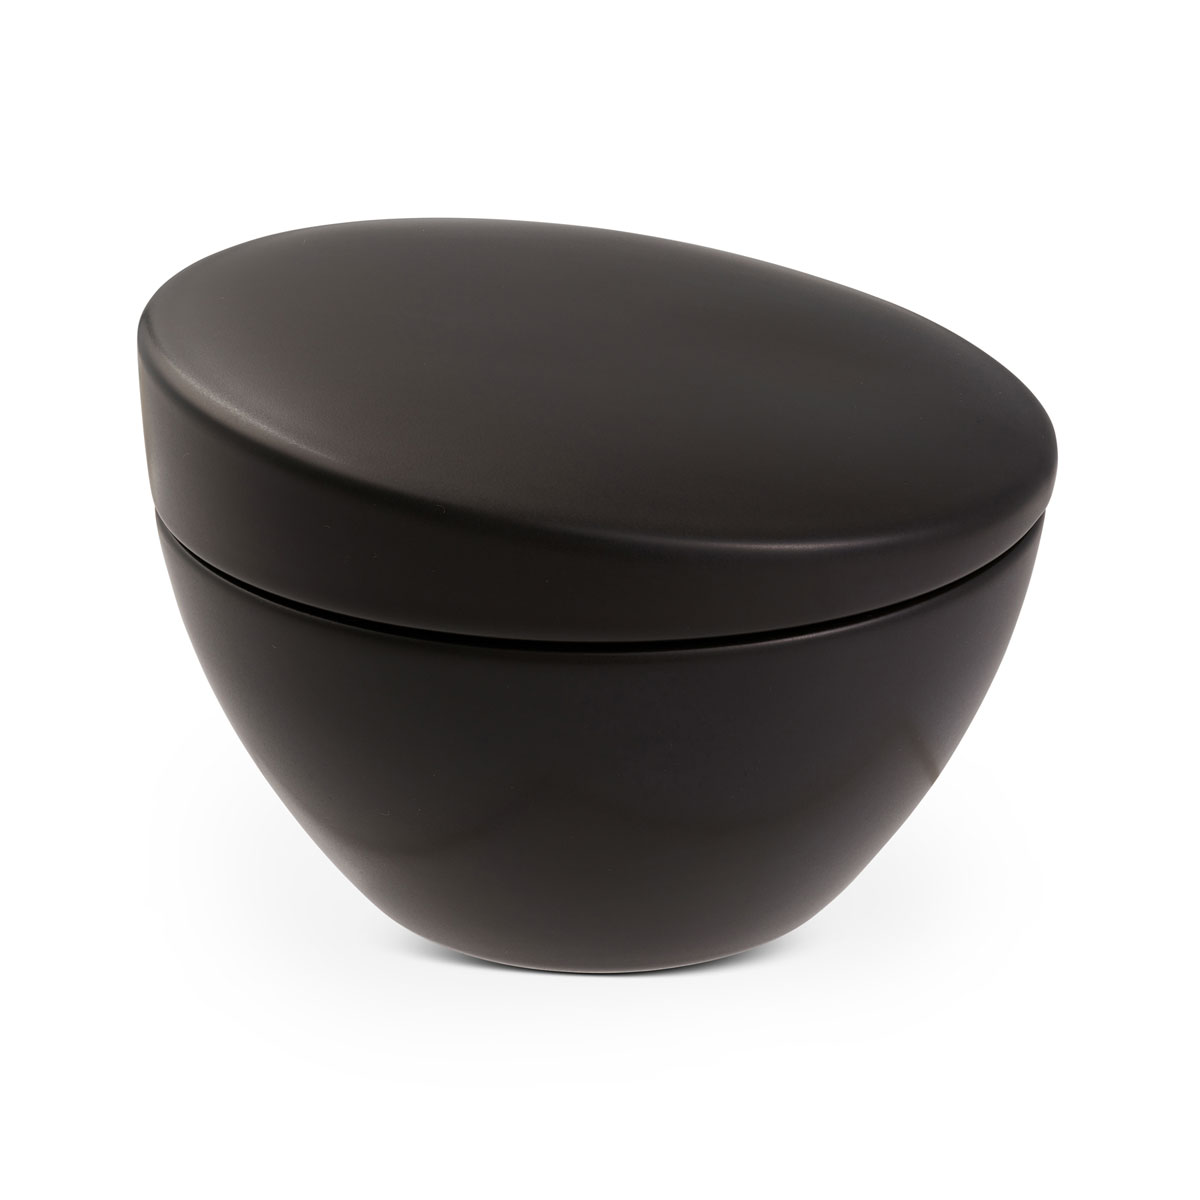 Nambe China Orbit Sugar Bowl, Celestial Black